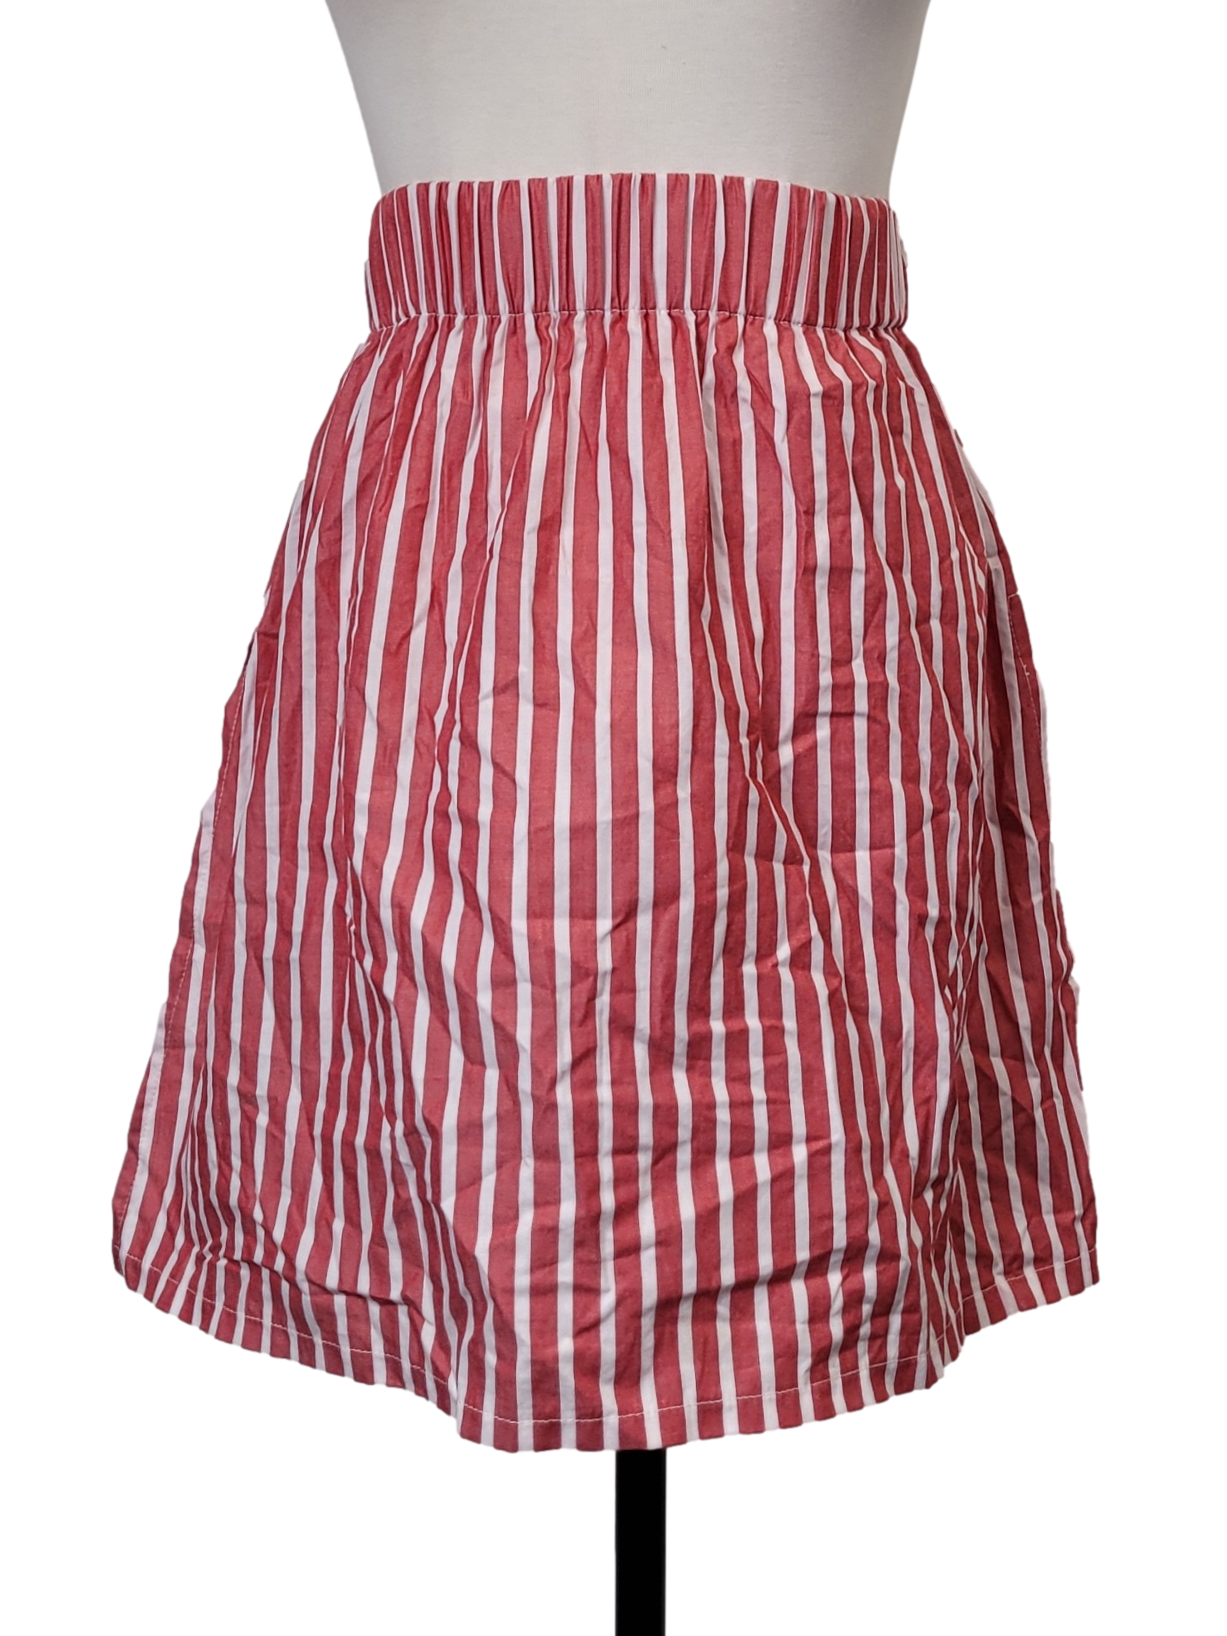 Strawberry Red Striped Skirt